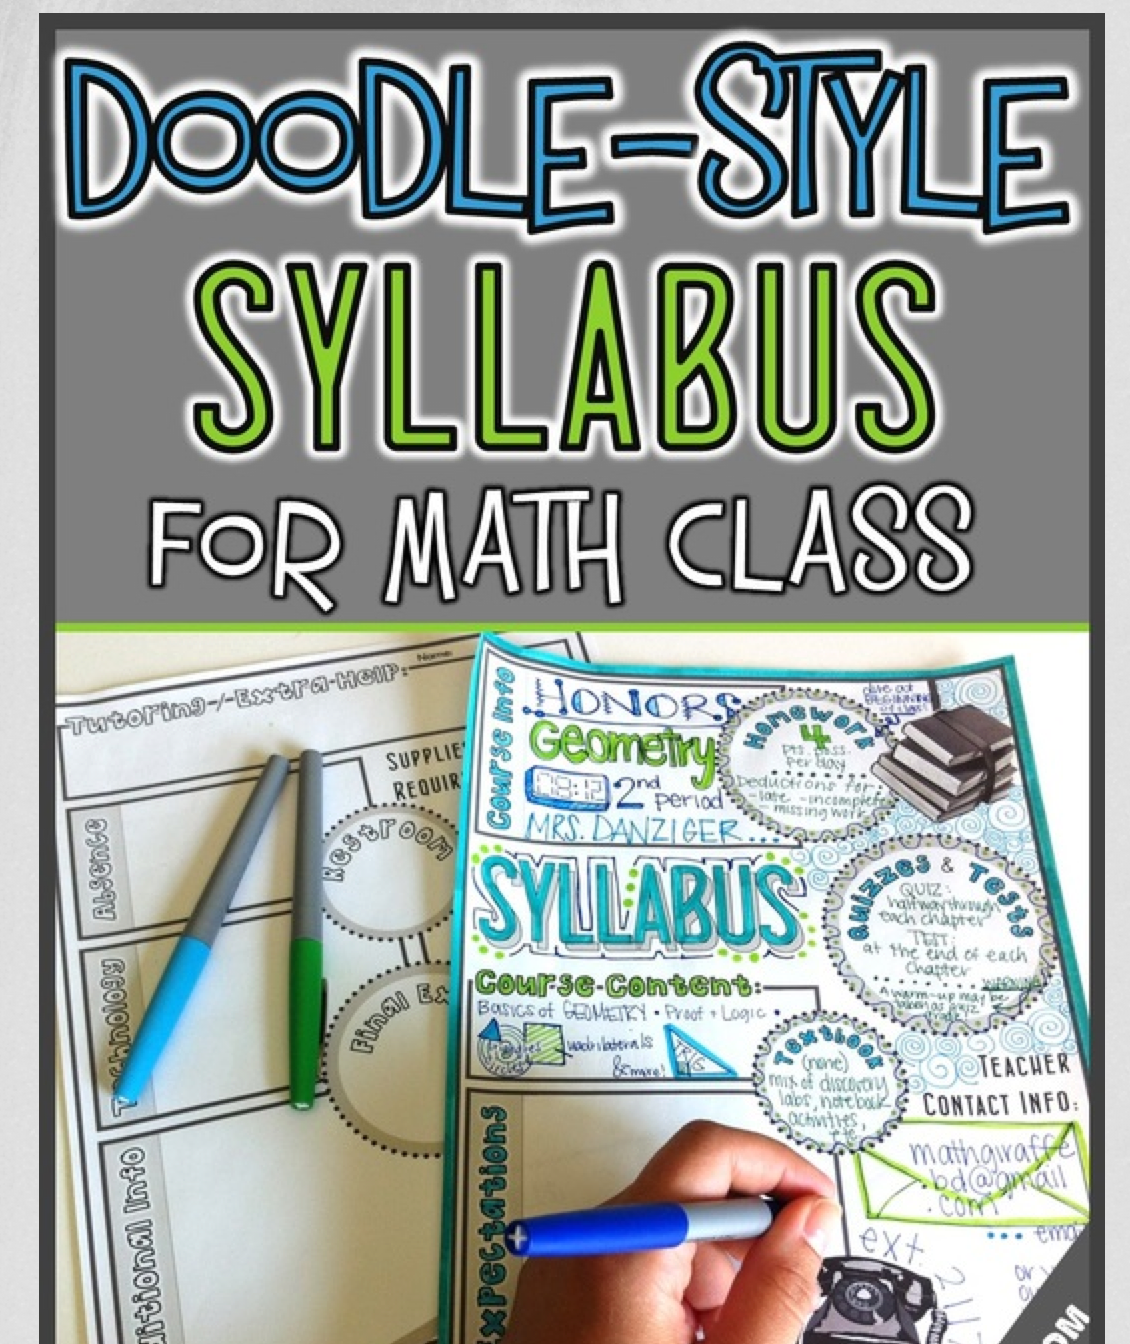 Doodle-style-syllabus